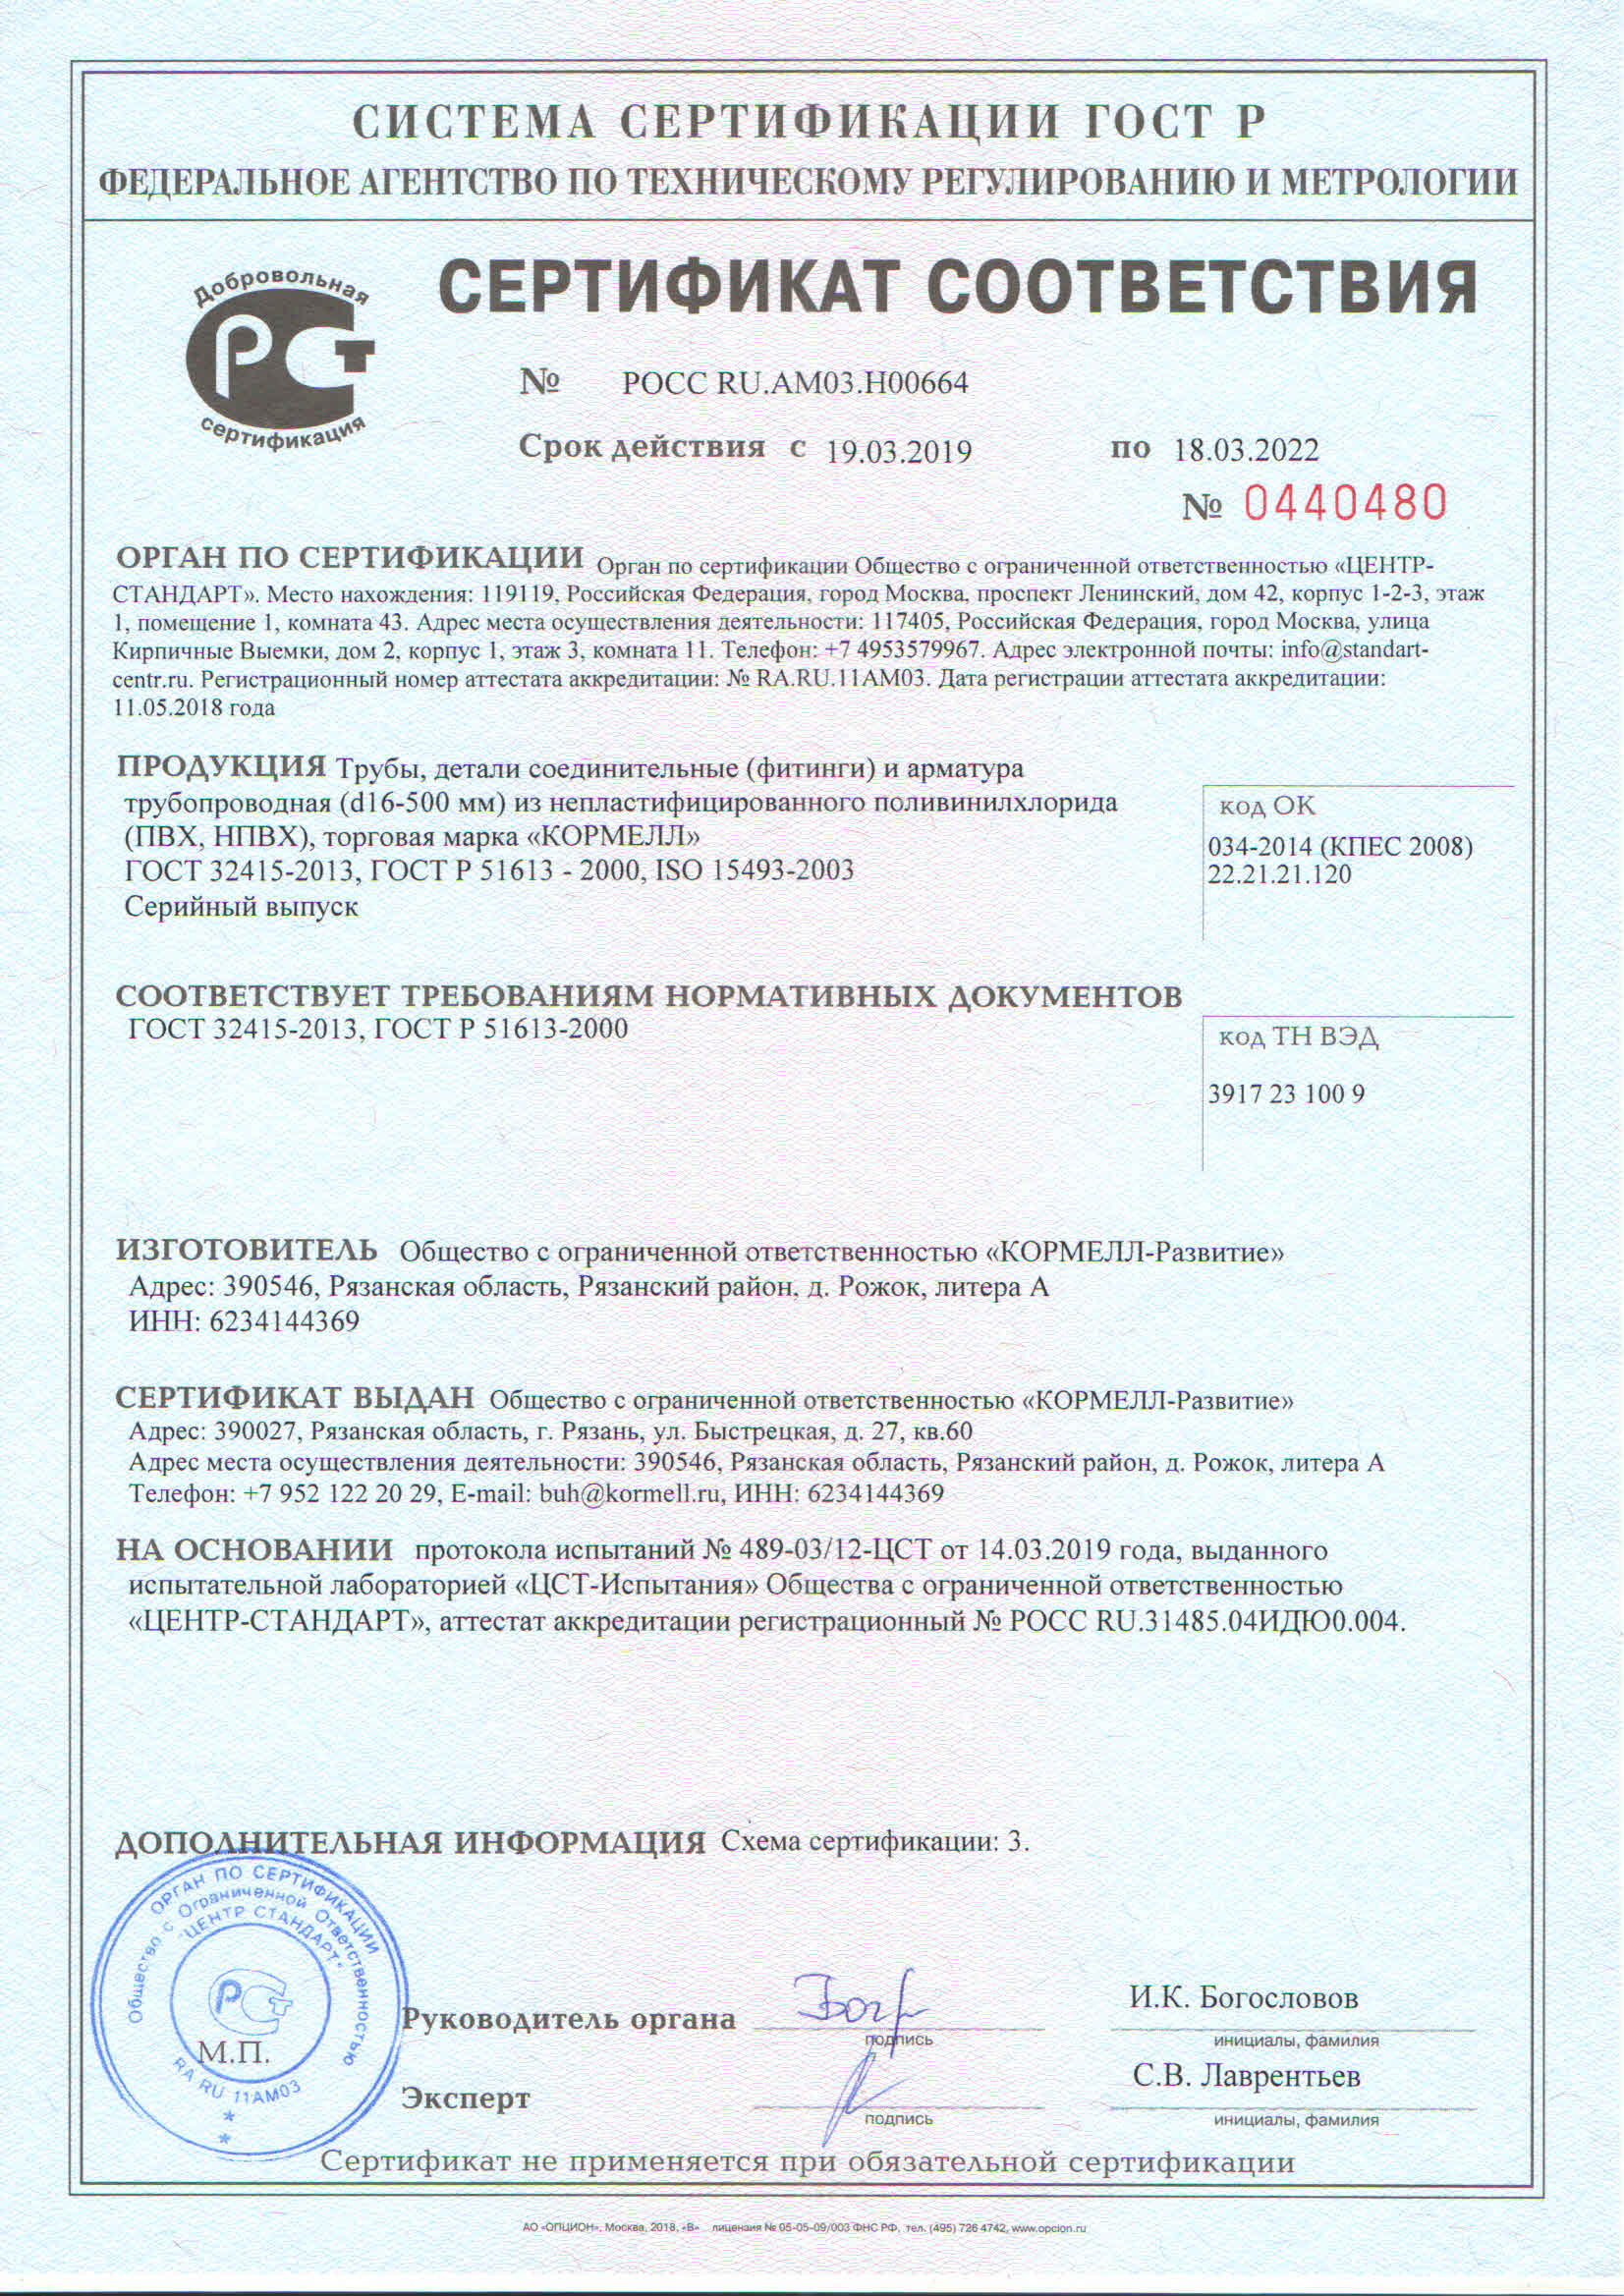 Сертификат соответствия ГОСТ 32415-2013, ГОСТ Р 51613-2000